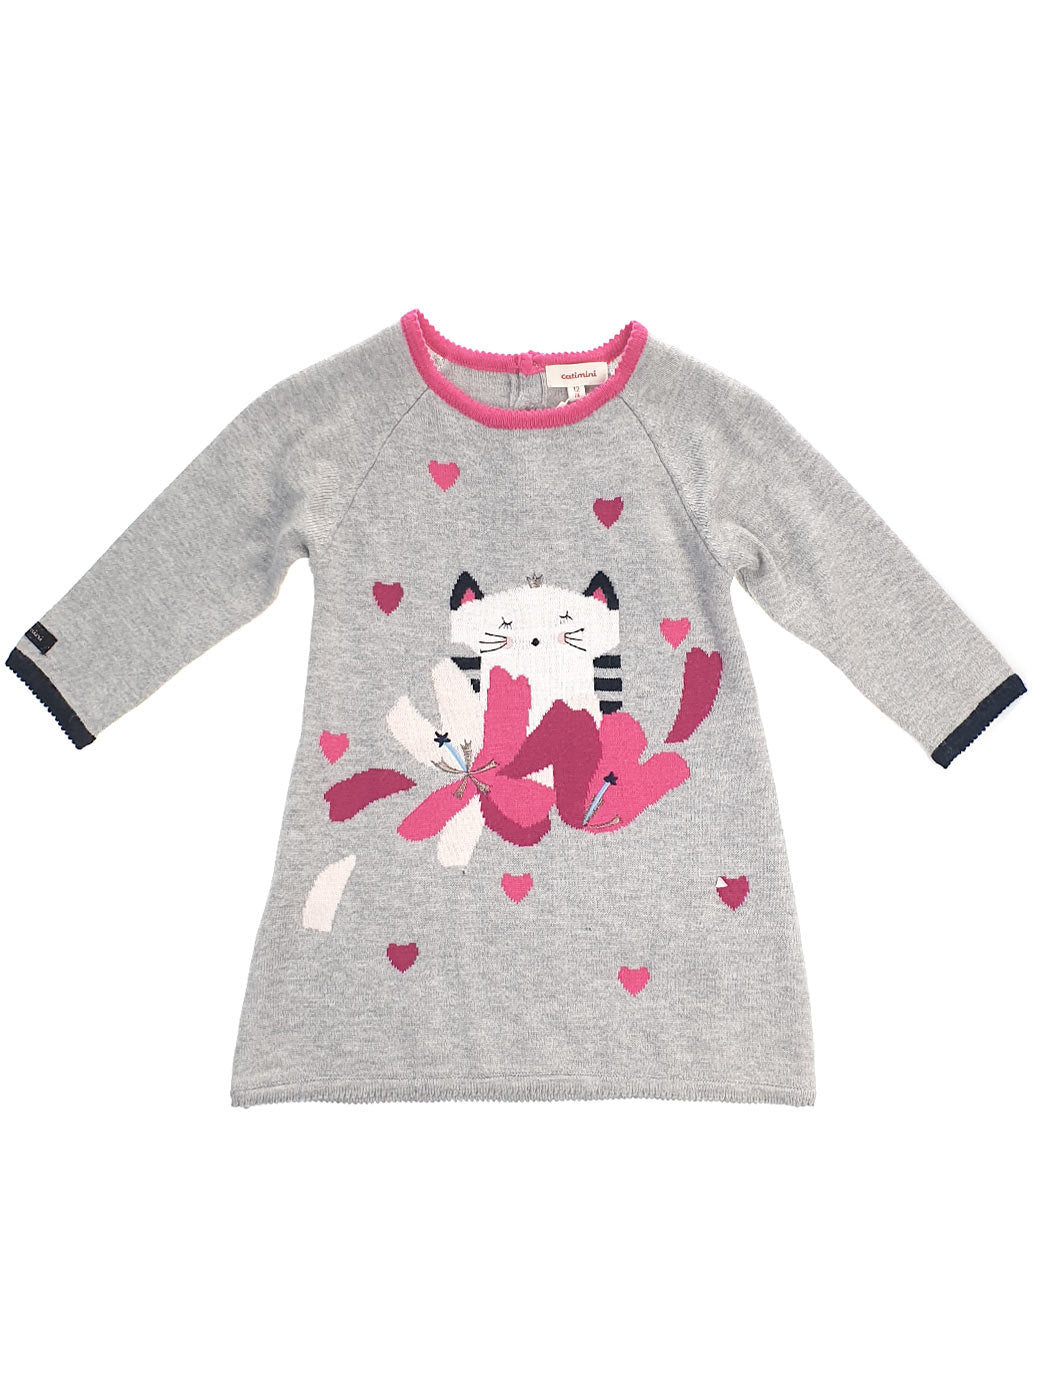 Baby Girl's knitted dress-CM30163-Grey